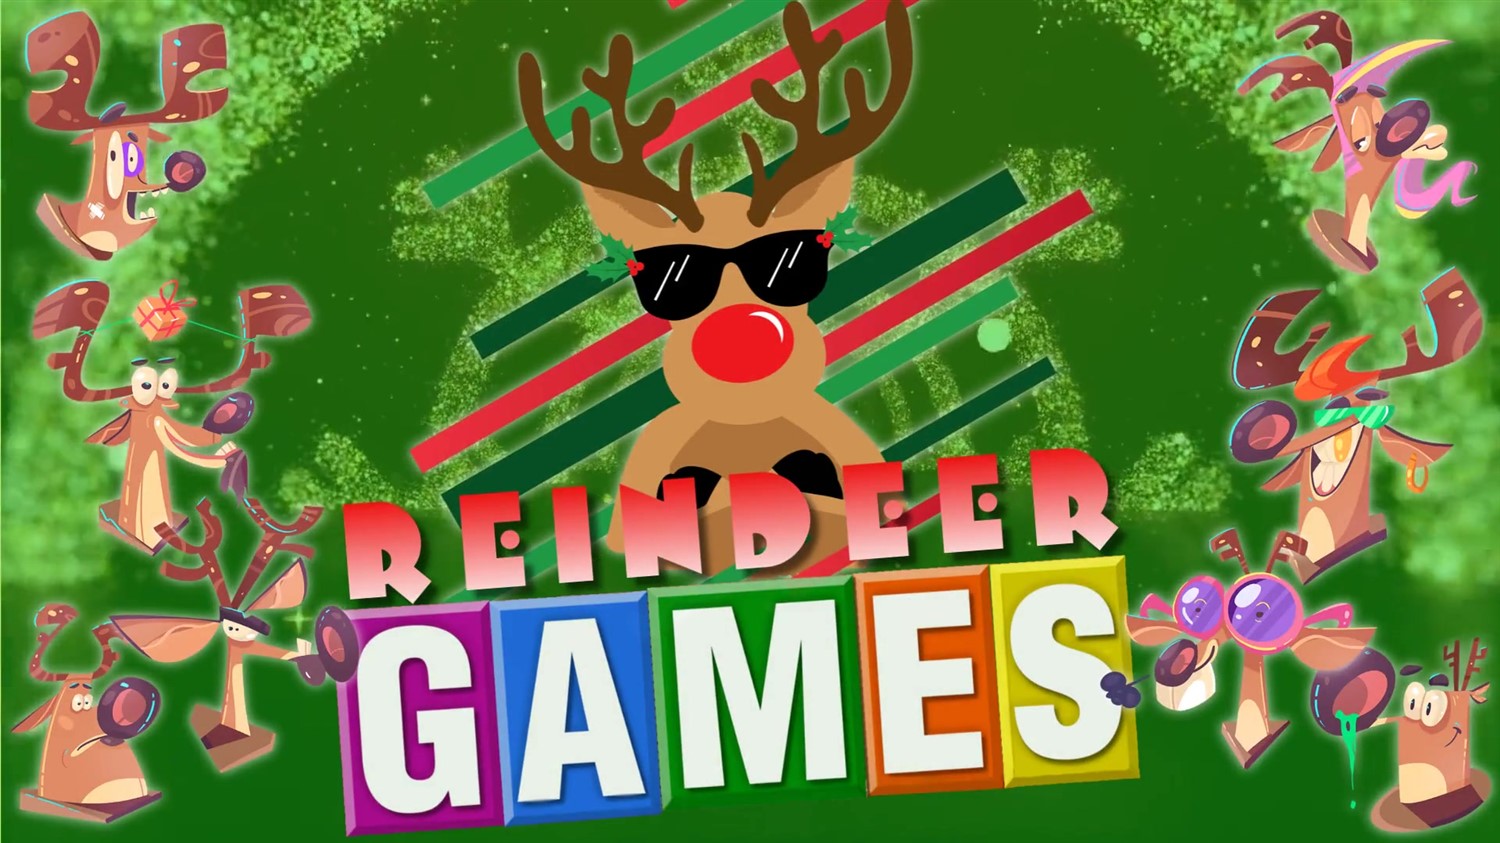 REINDEER GAMES Fun Holiday Game Show for All Ages on dic. 17, 19:00@FFX Theatre - Elegir asientoCompra entradas y obtén información enFamily Fun Xperience tickets.ffxshow.org